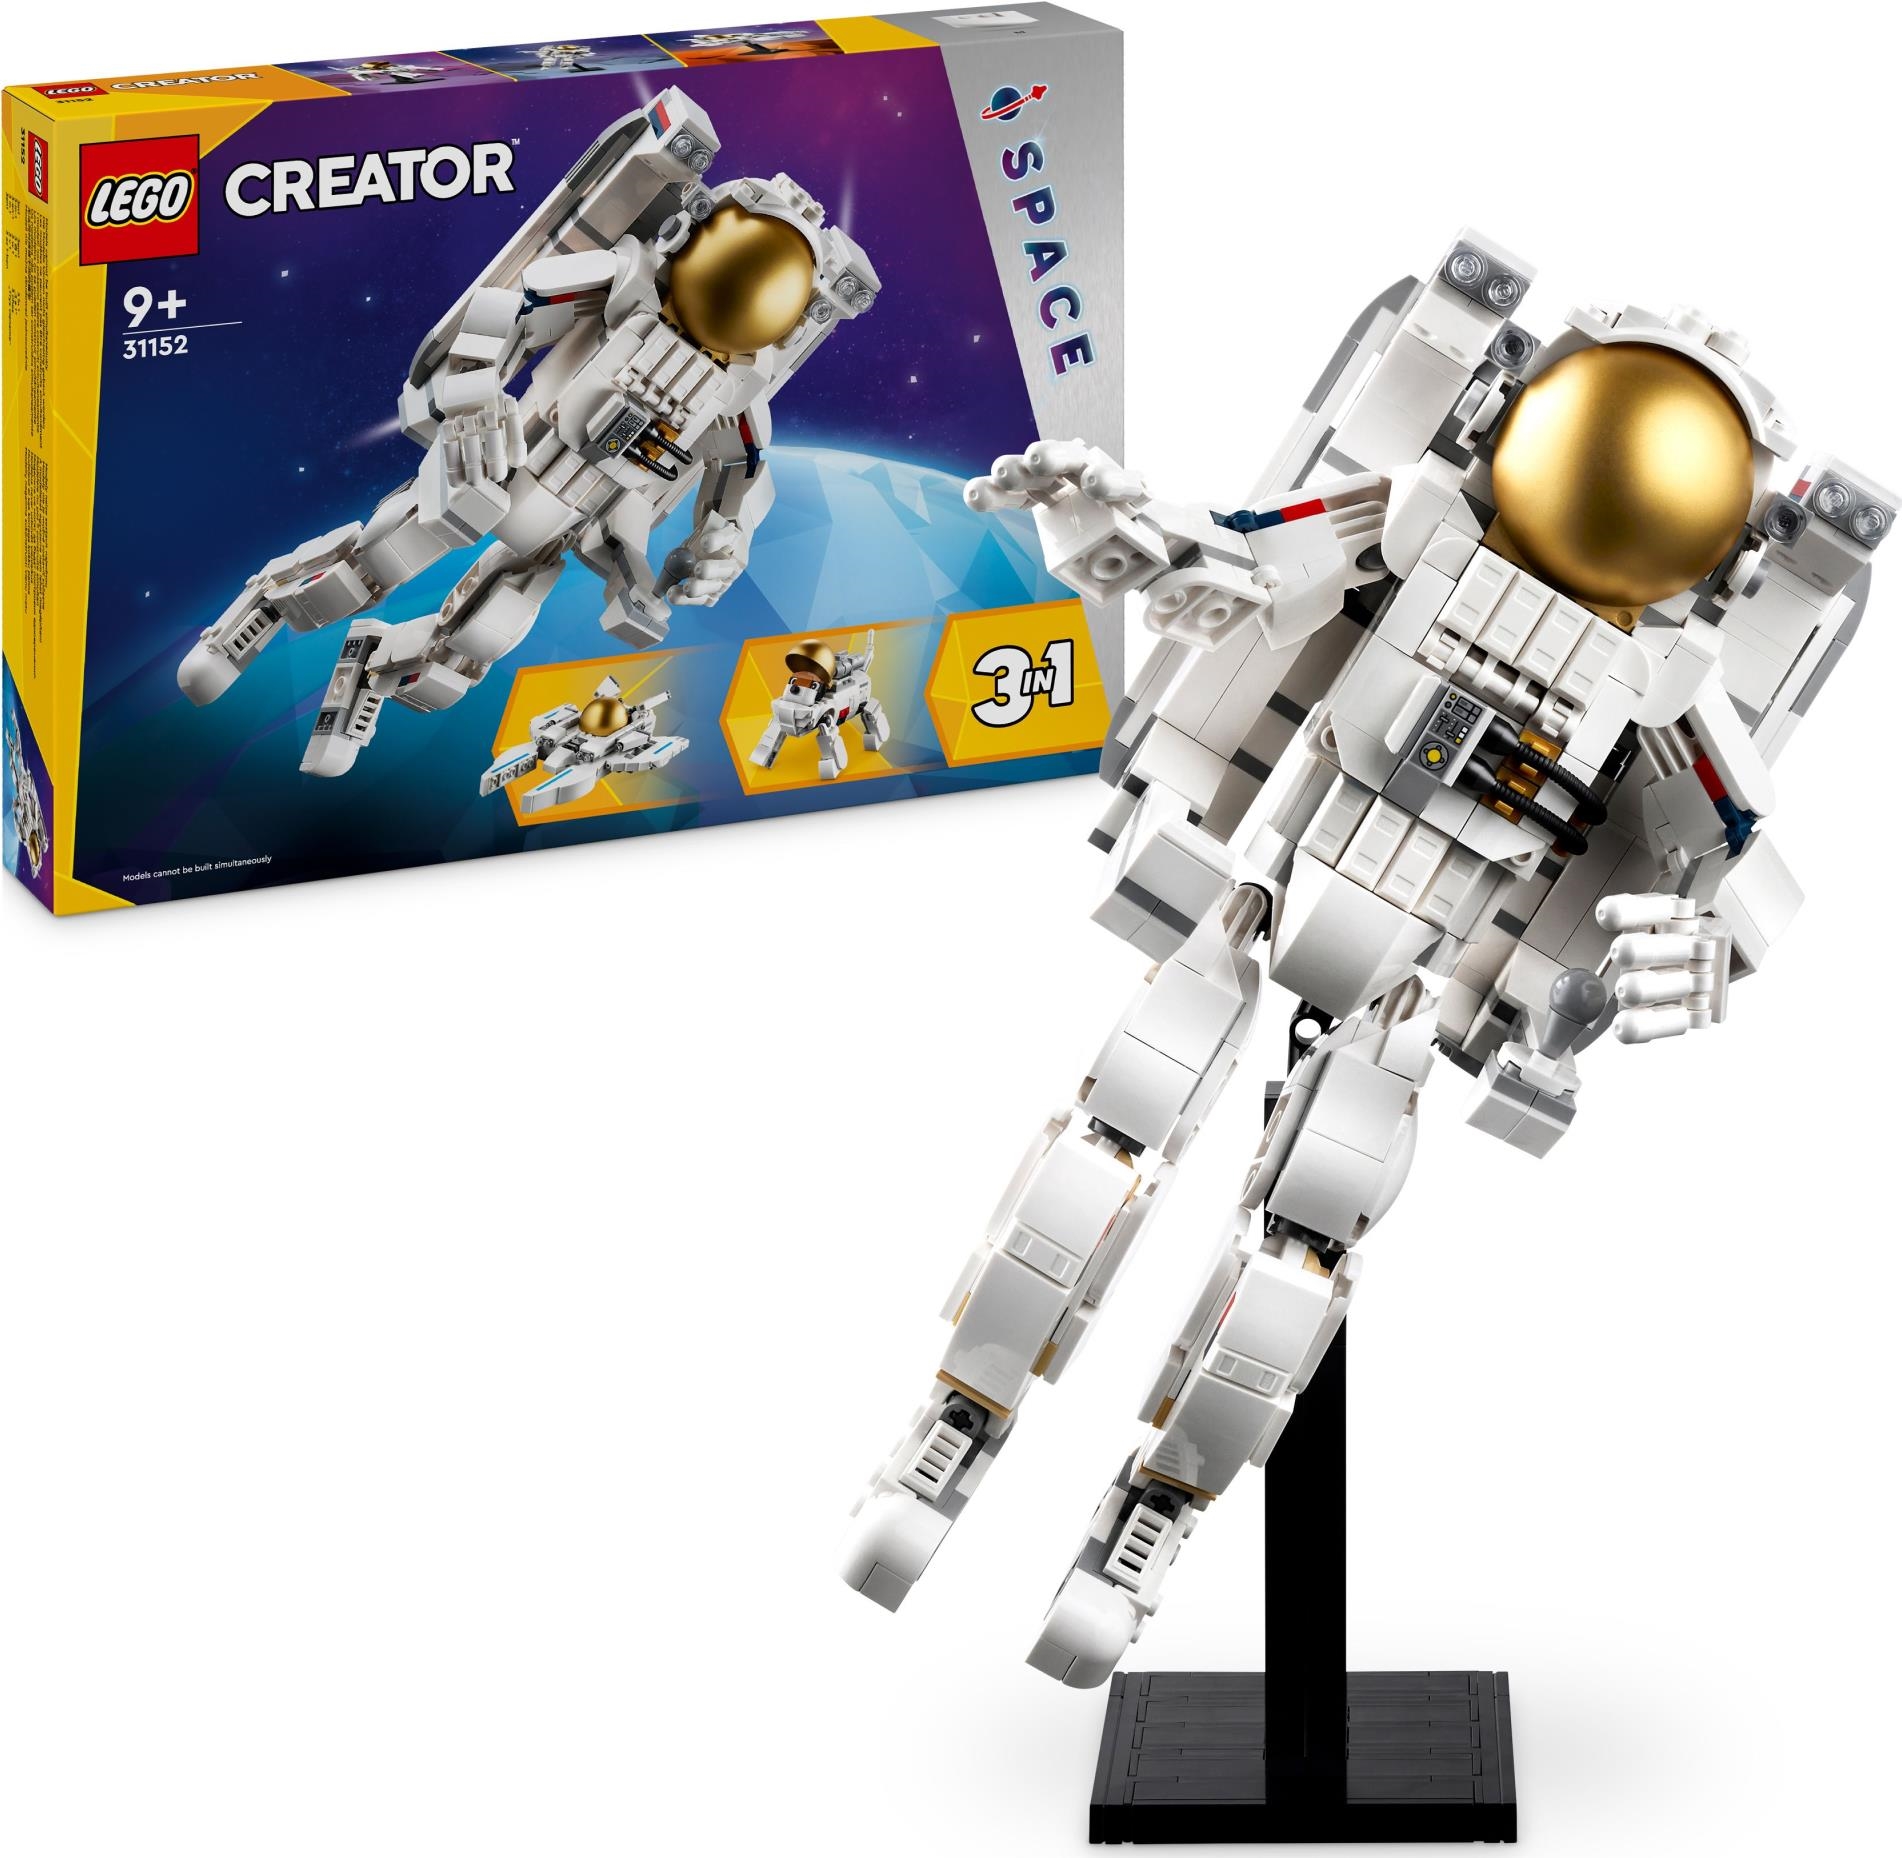 Lego: 31152 - Creator - Astronauta